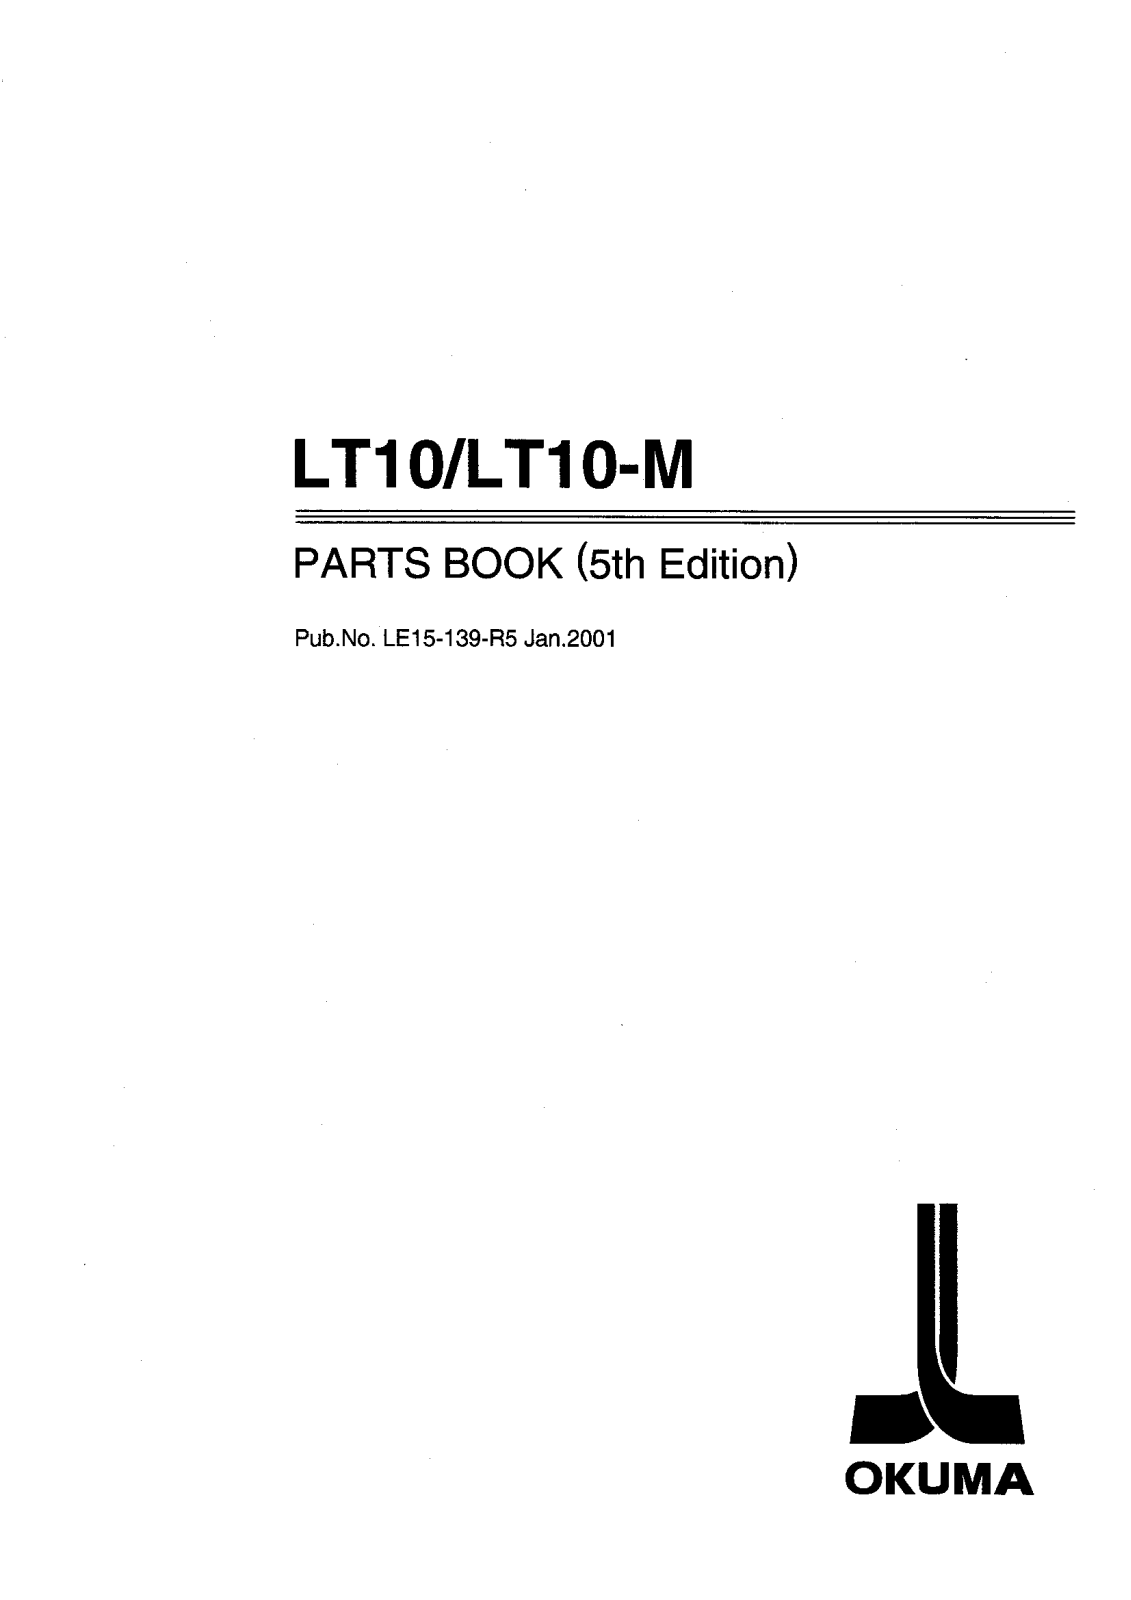 okuma LT10, LT10-M User Manual